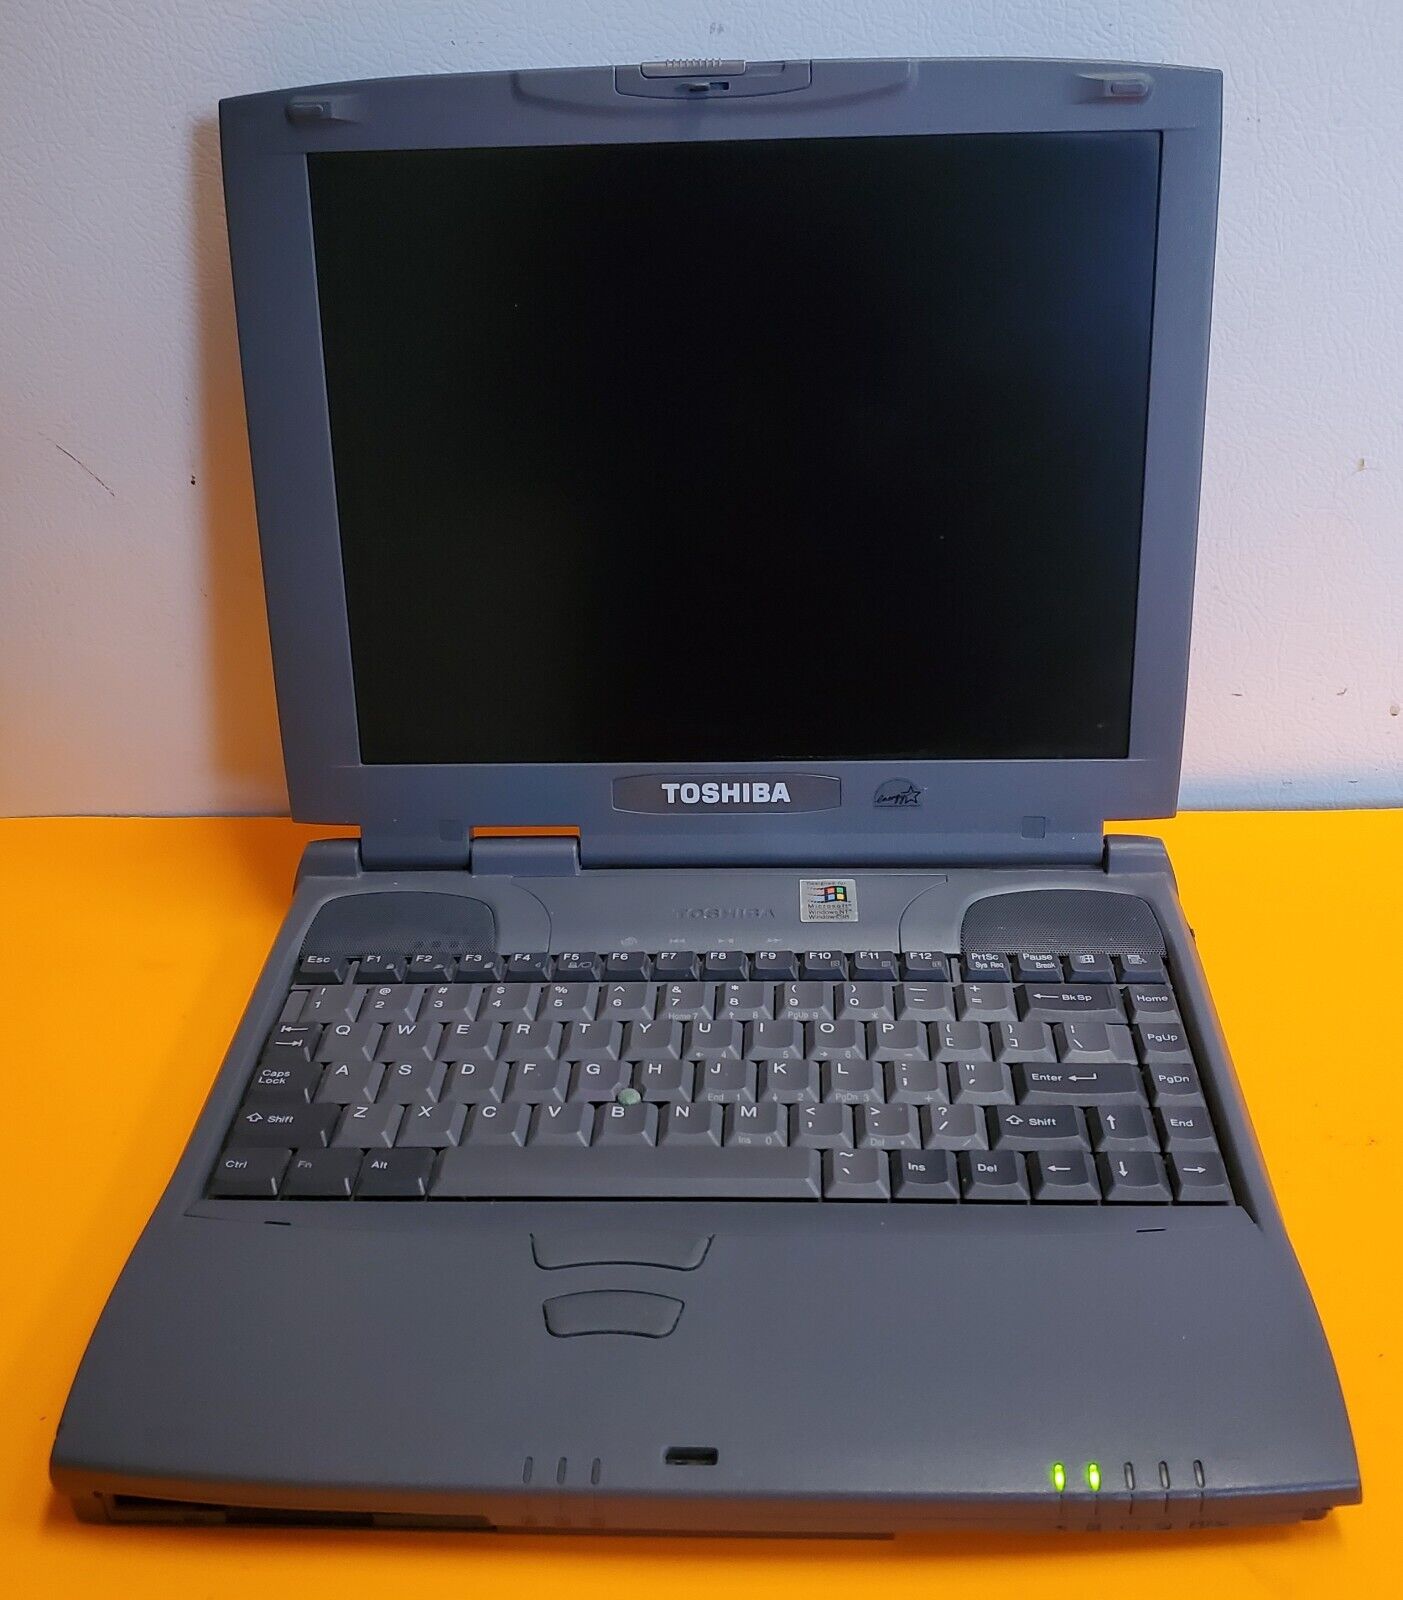 Retro Toshiba Satellite 2140XCDS Model P5214U Laptop Computer Vintage - AS IS